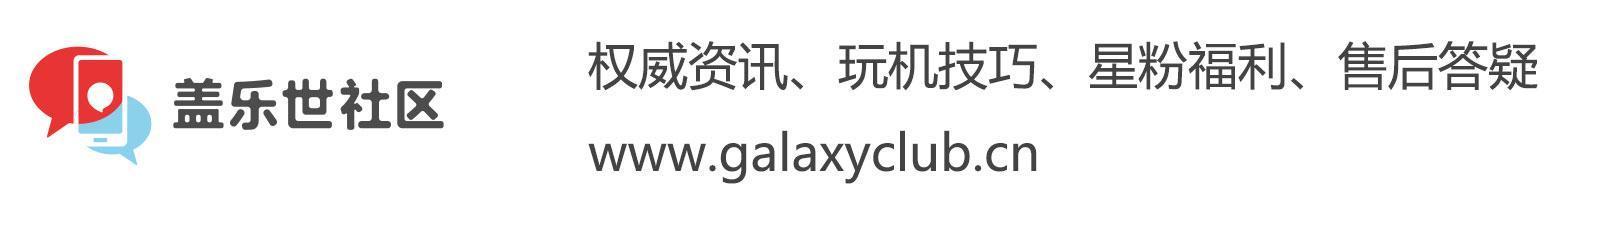 SAMSUNG GALAXY S8 极致拍摄